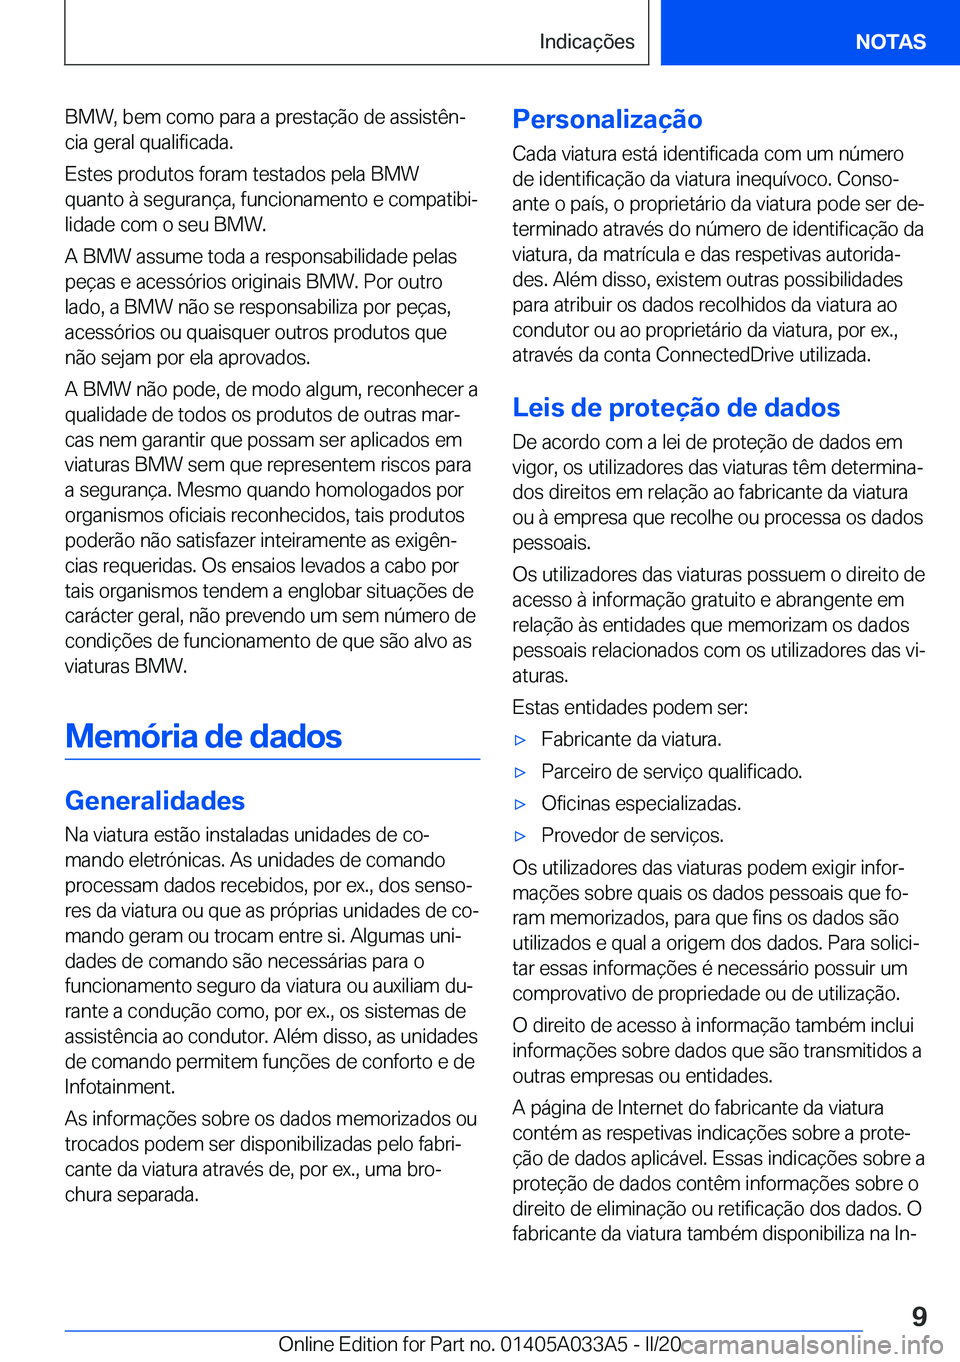 BMW M8 GRAN COUPE 2020  Manual do condutor (in Portuguese) �B�M�W�,��b�e�m��c�o�m�o��p�a�r�a��a��p�r�e�s�t�a�